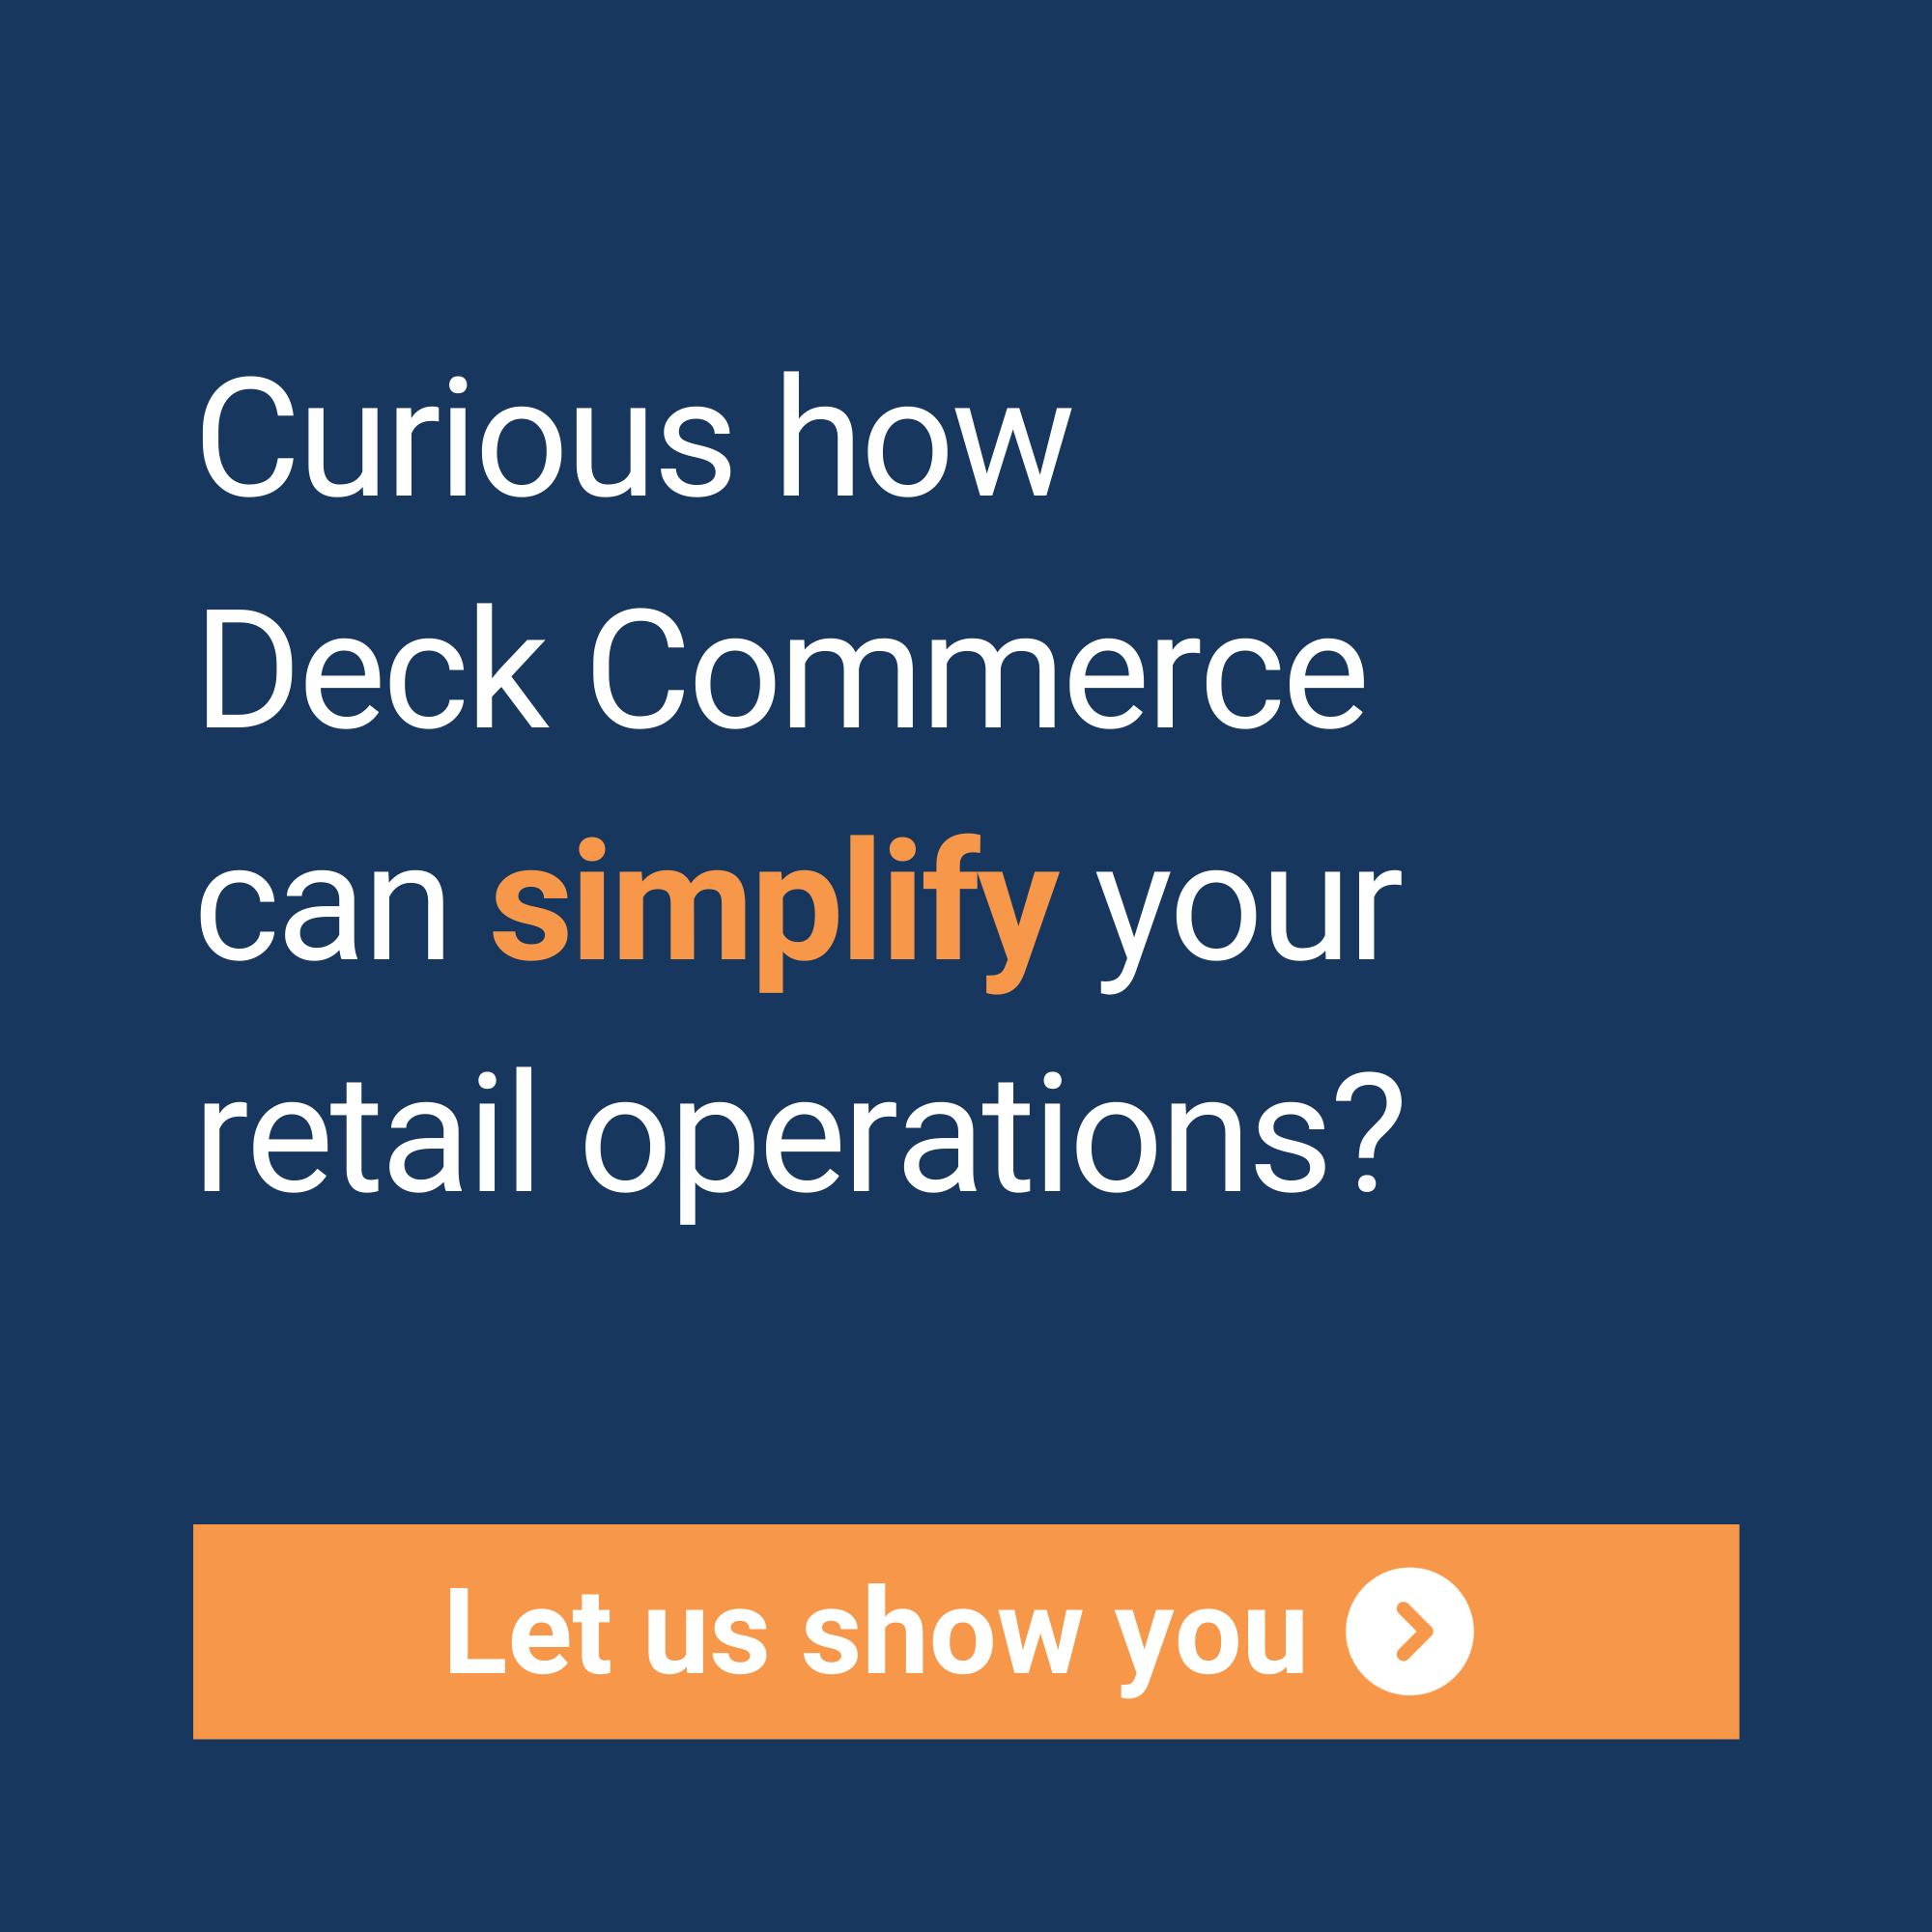 Deck Commerce order management helps simplify retail